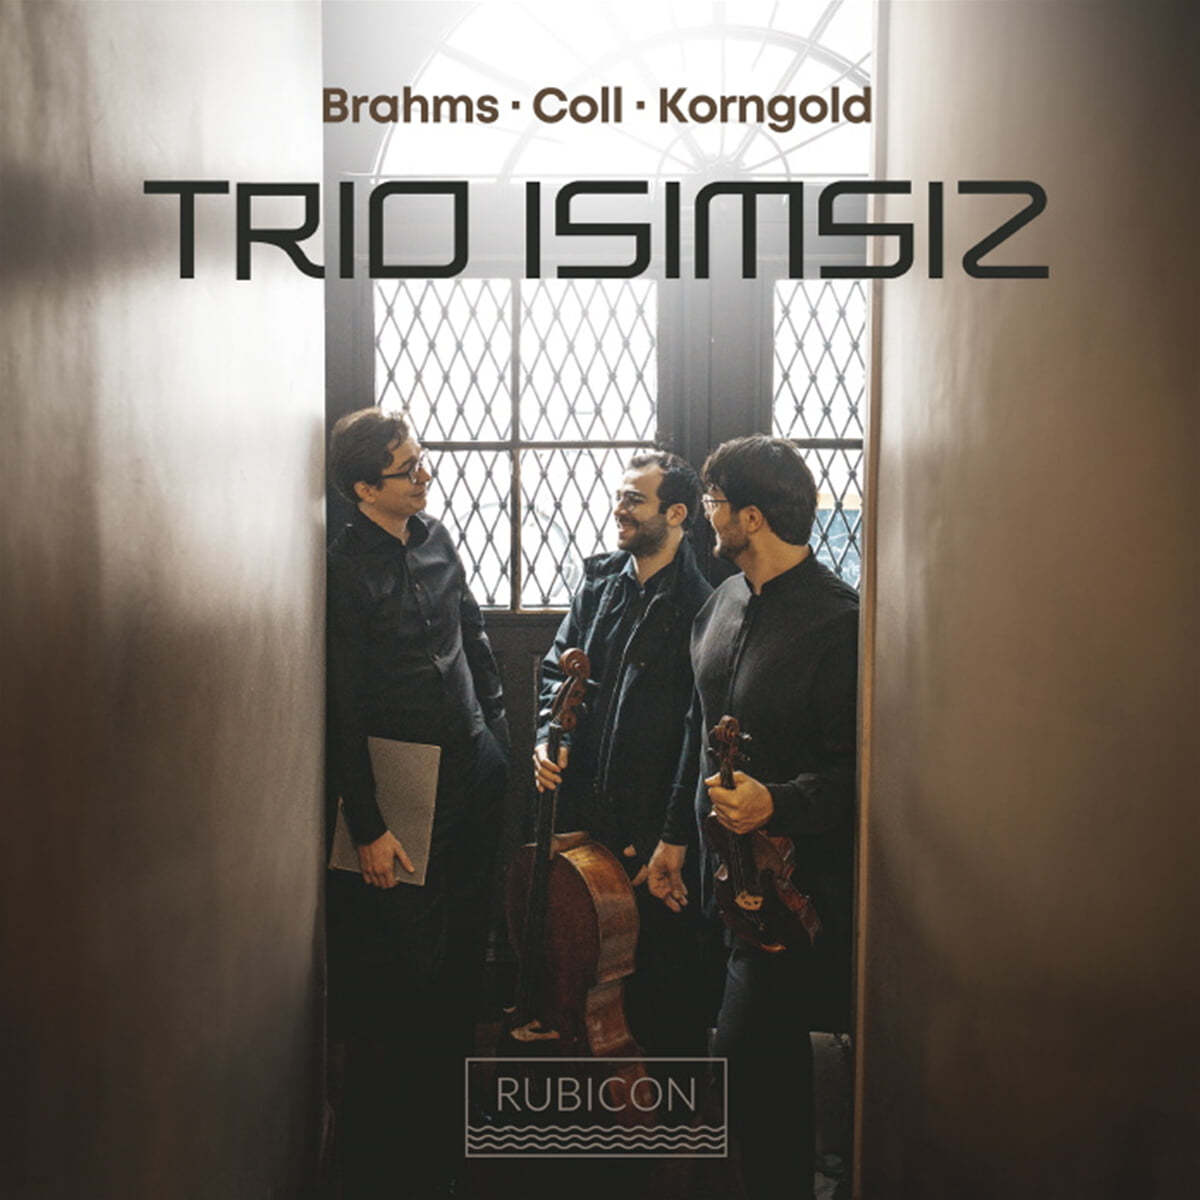 Trio Isimsiz 브람스, 콜, 코른골트: 피아노 트리오 (Brahms, Coll, Korngold: Trio Isimsiz)